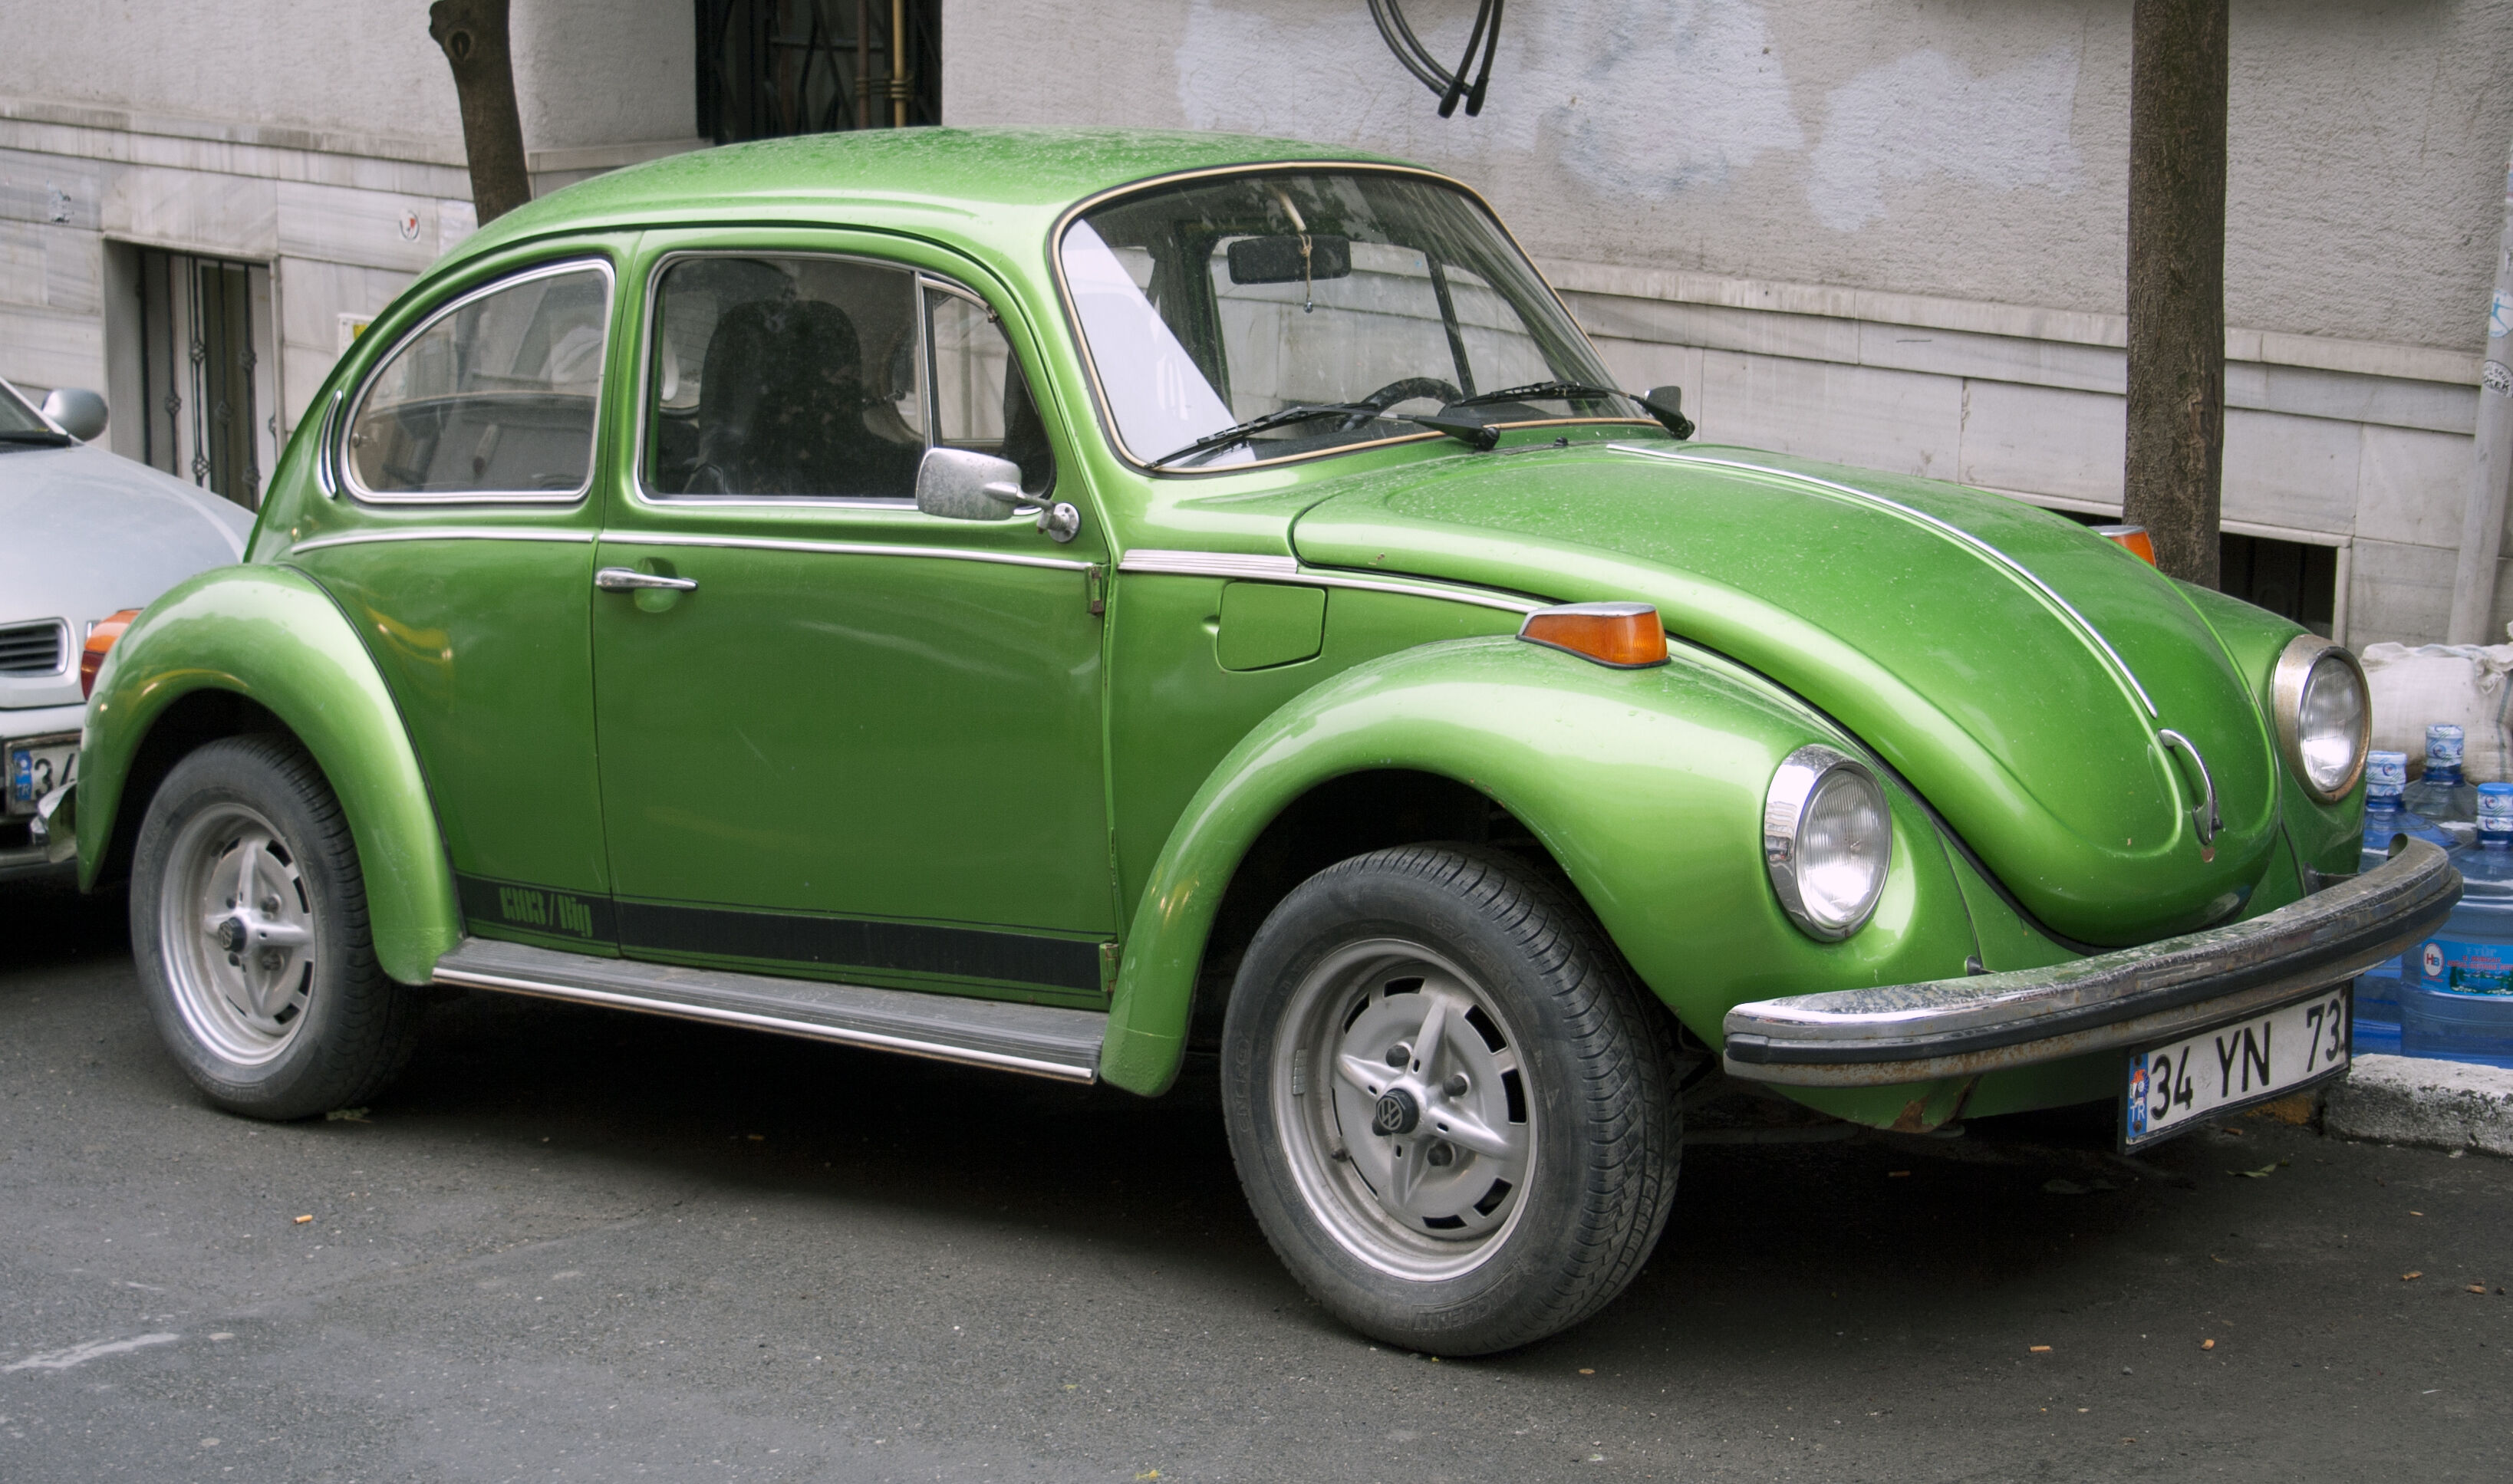 7-Piece Chrome Trim Kit for VW Beetle 1973–1979 Excluding 1303 Models